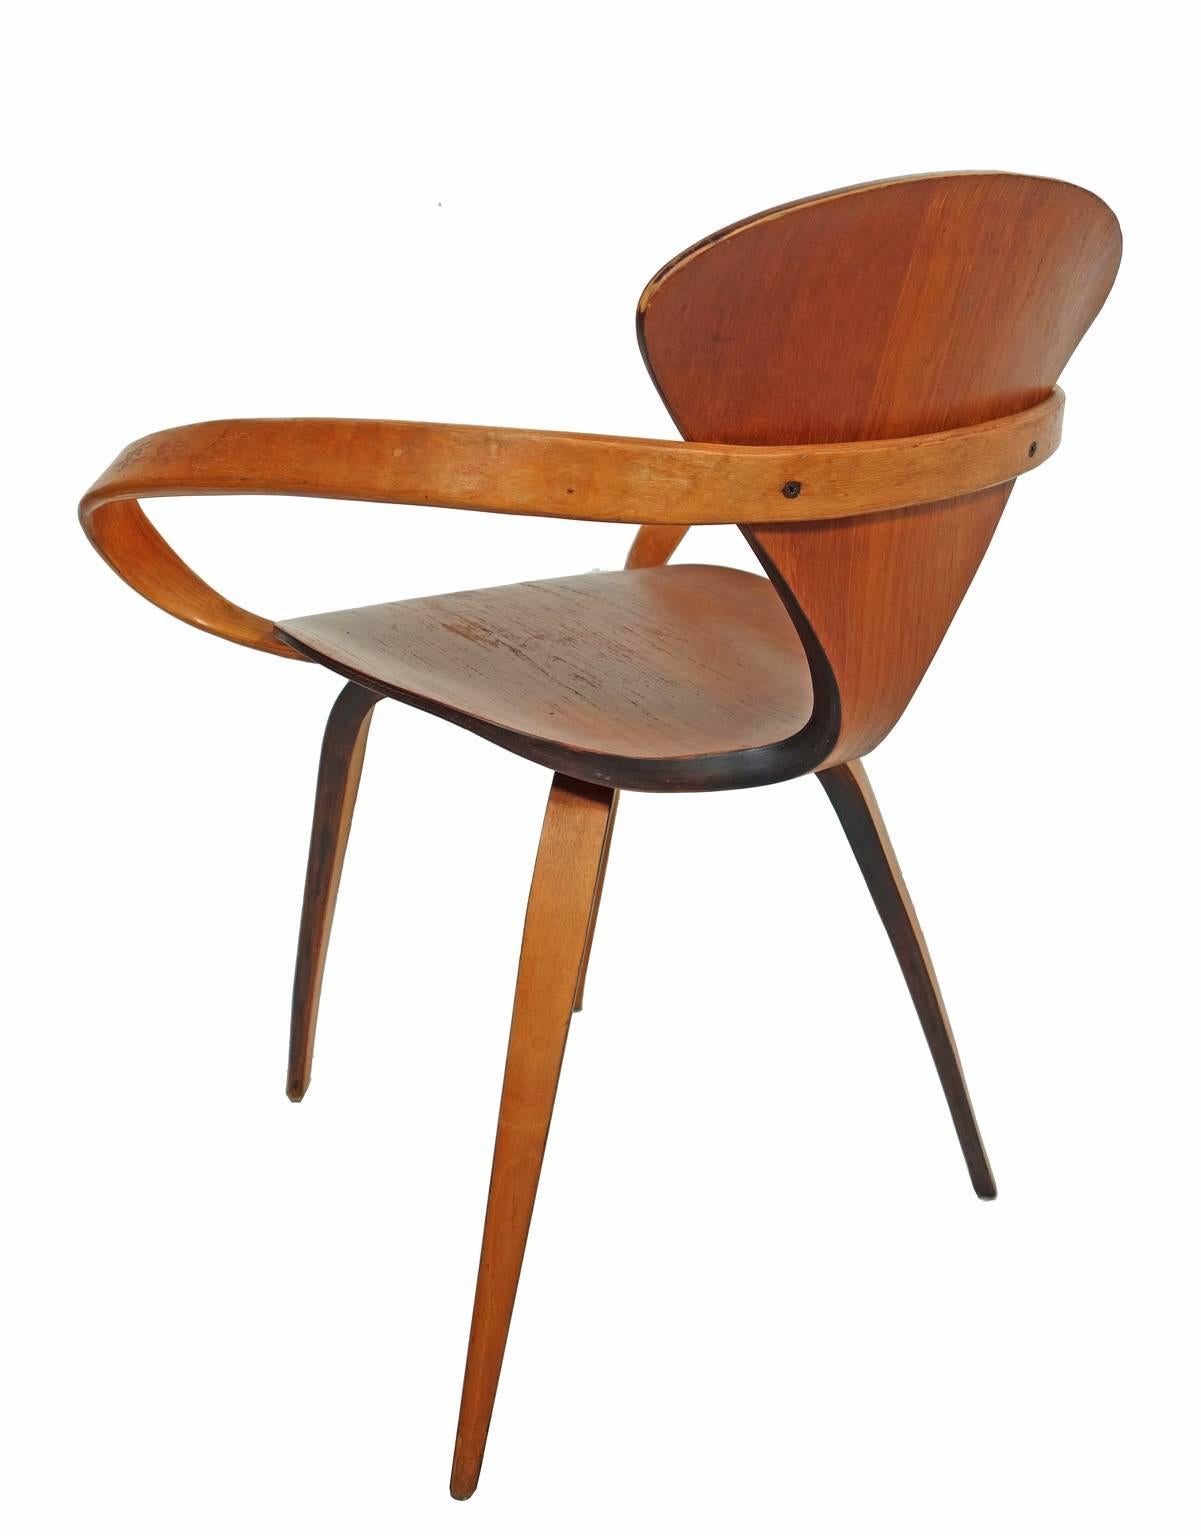 Mid-Century Modern Norman Cherner Chair for Plycraft -Teak and Beach